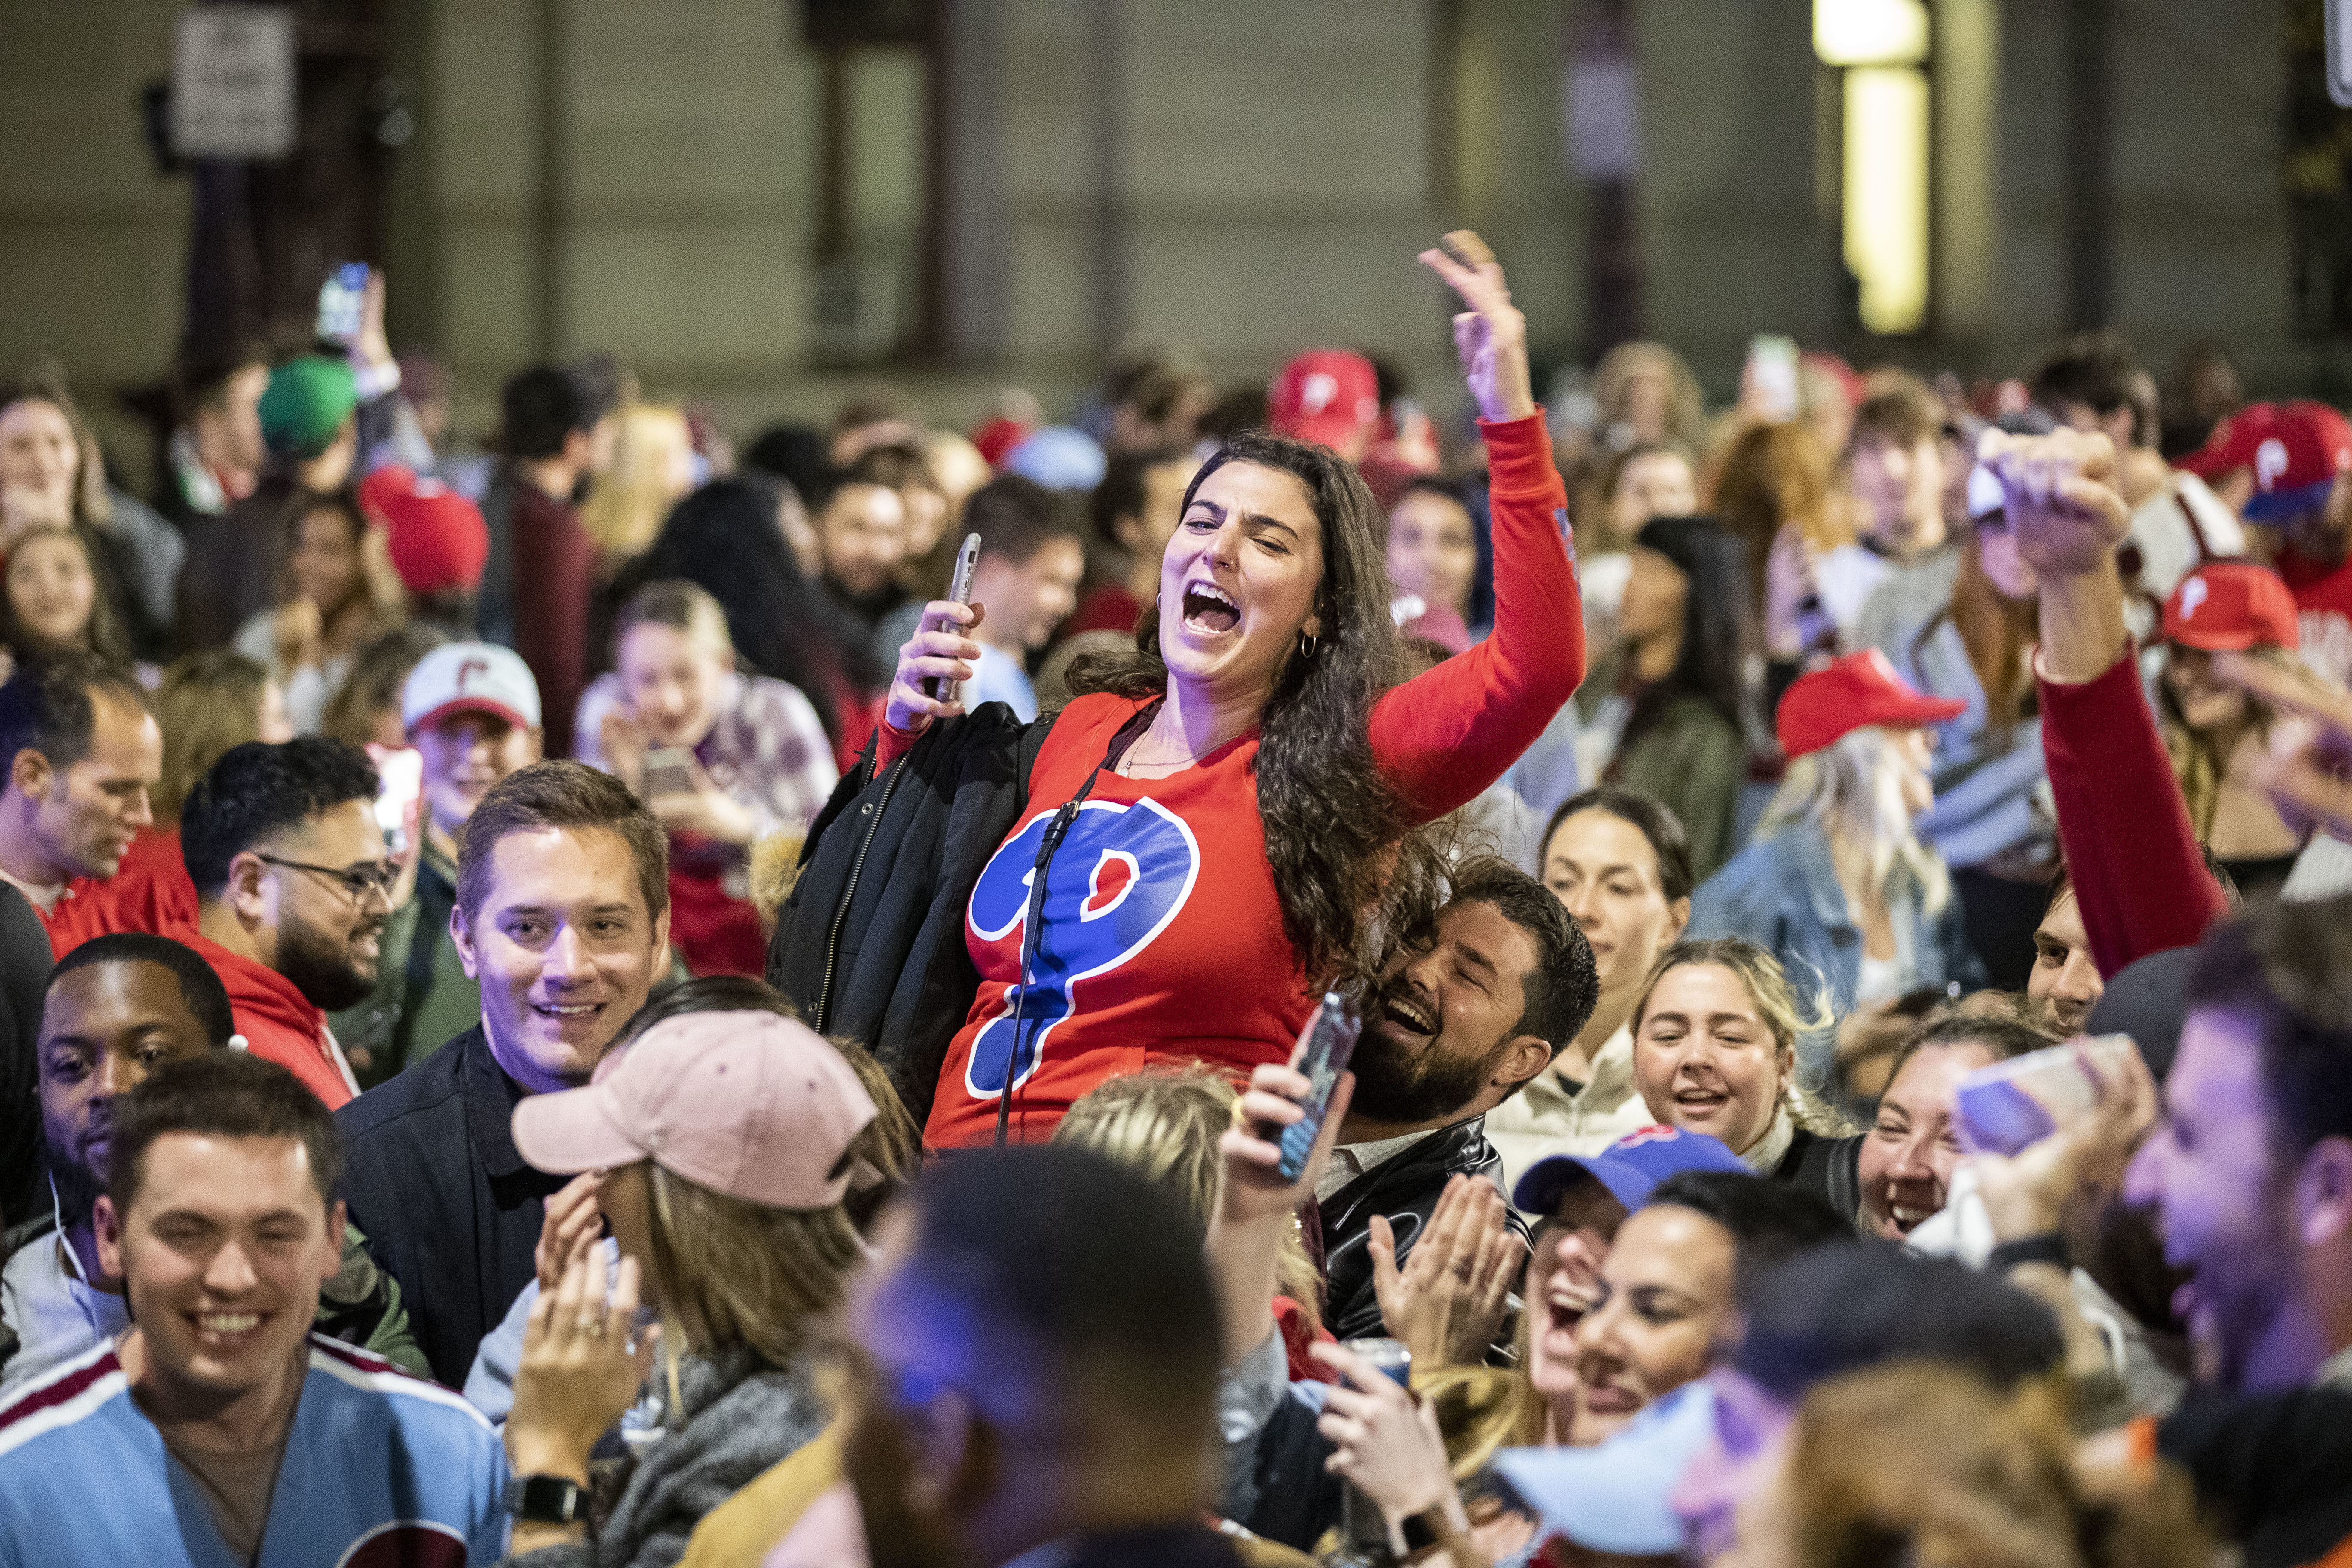 Philadelphia Phillies fans go crazy celebrating team going to World Series